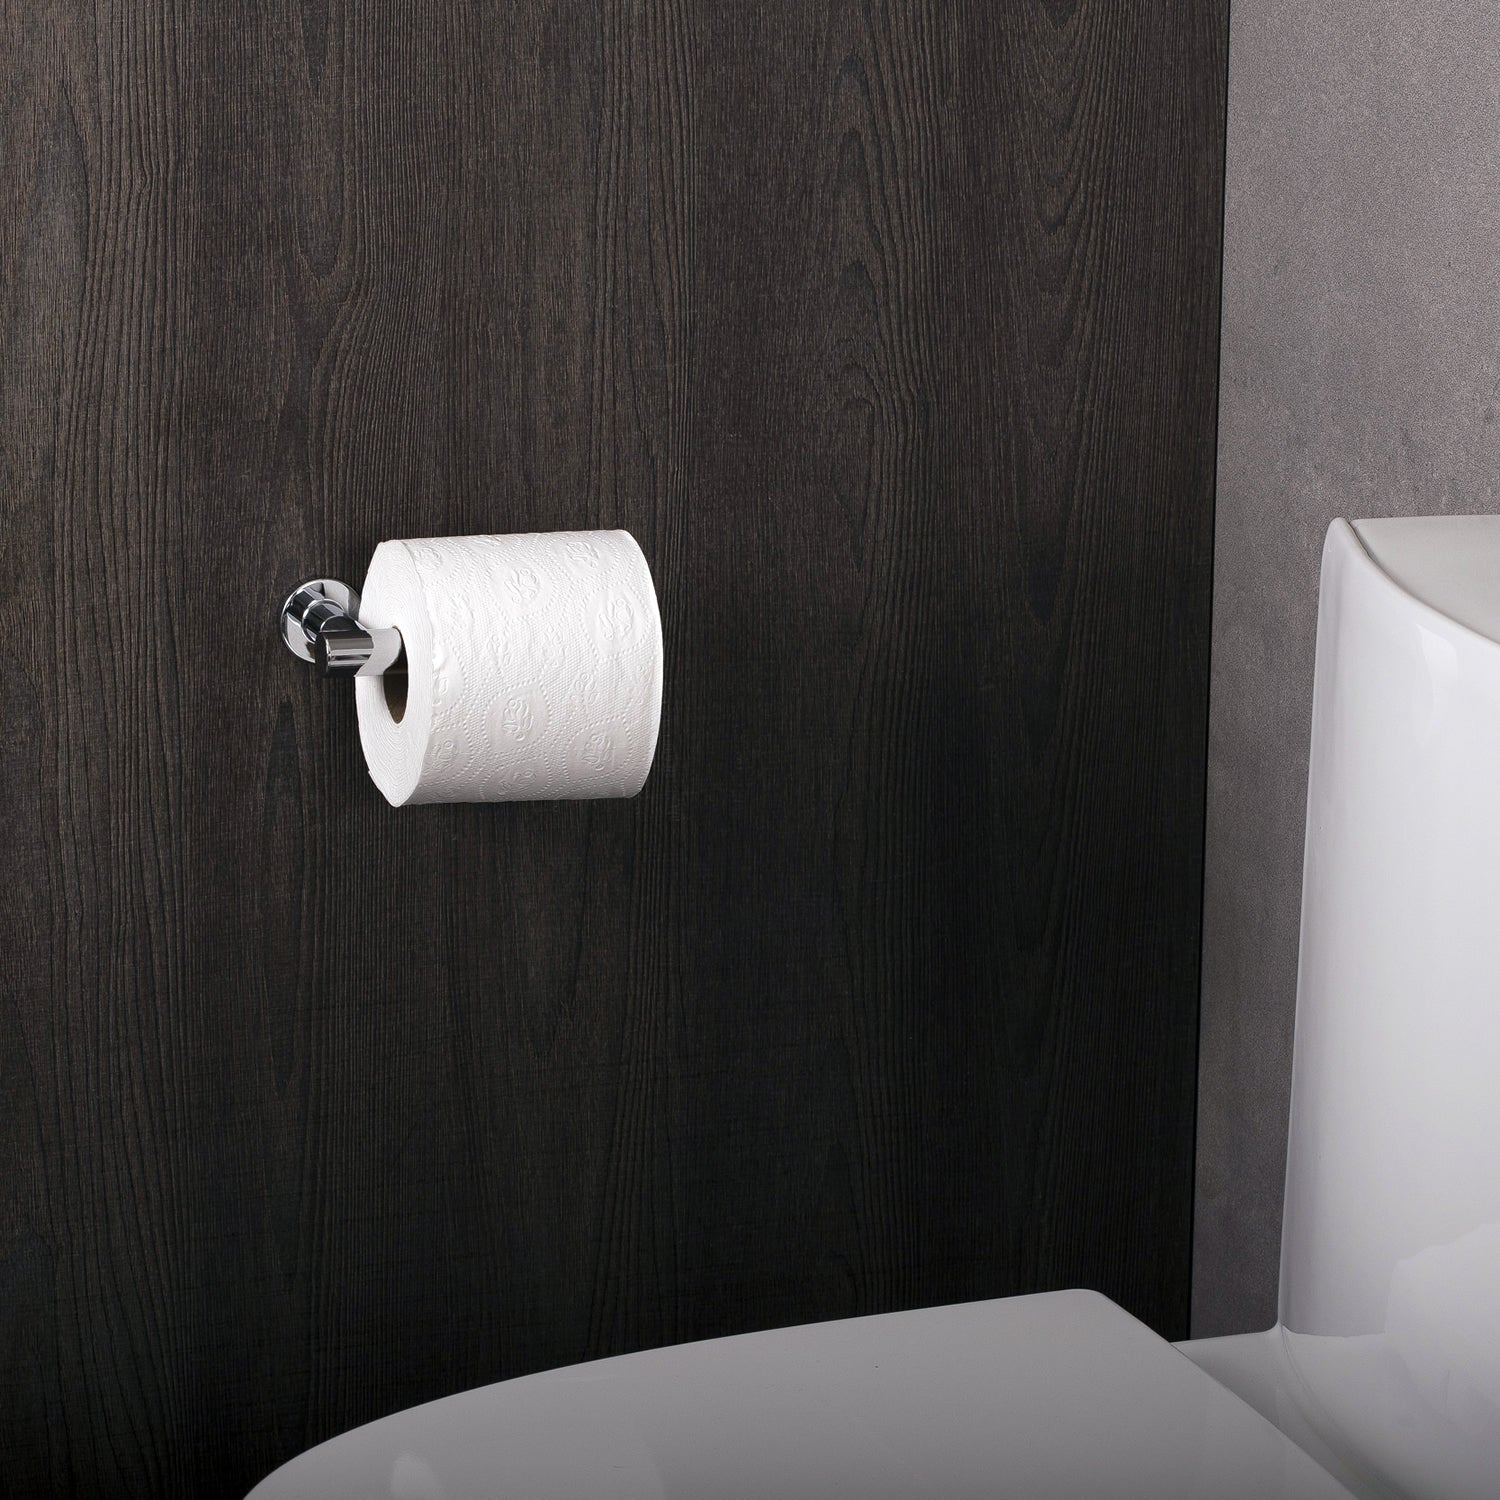 COSMIC Architect Toilet Paper Holder, Brass Body, Chrome Finish, 6-5/16 x 3-9/16 x 1-3/4 Inches (2050158)